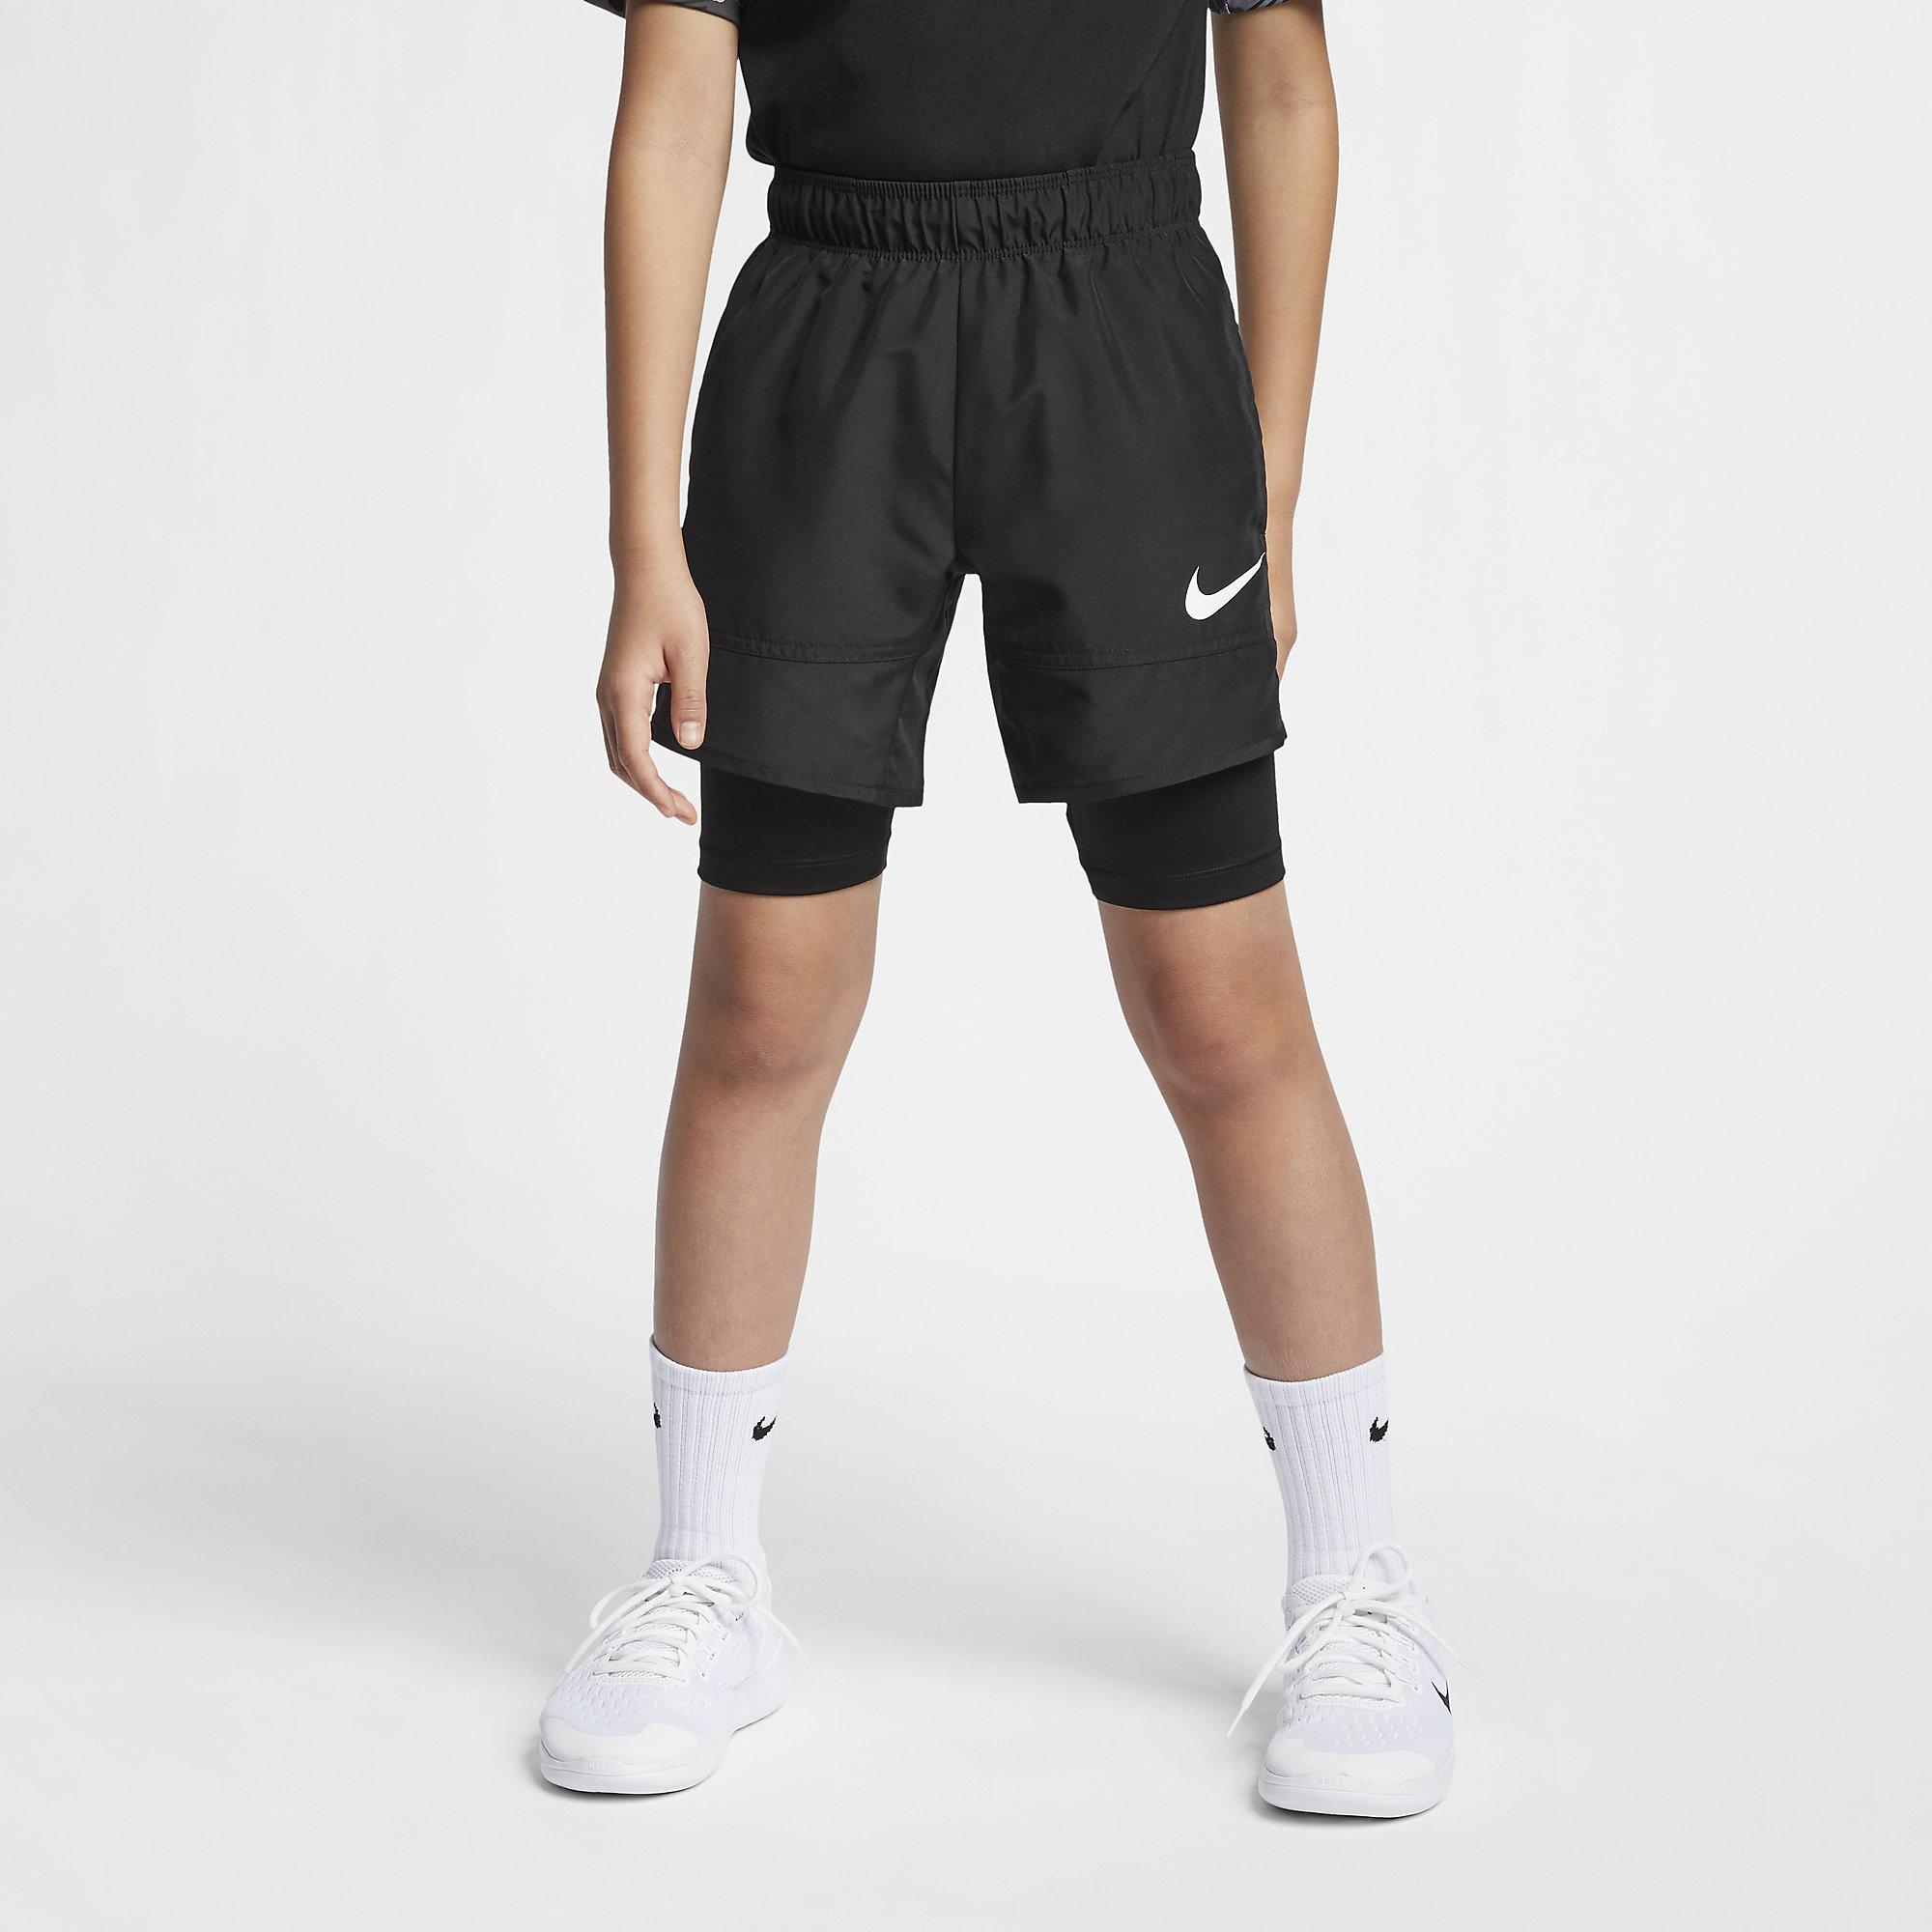 Nike Boys Hybrid Training Shorts - Black/White - Tennisnuts.com